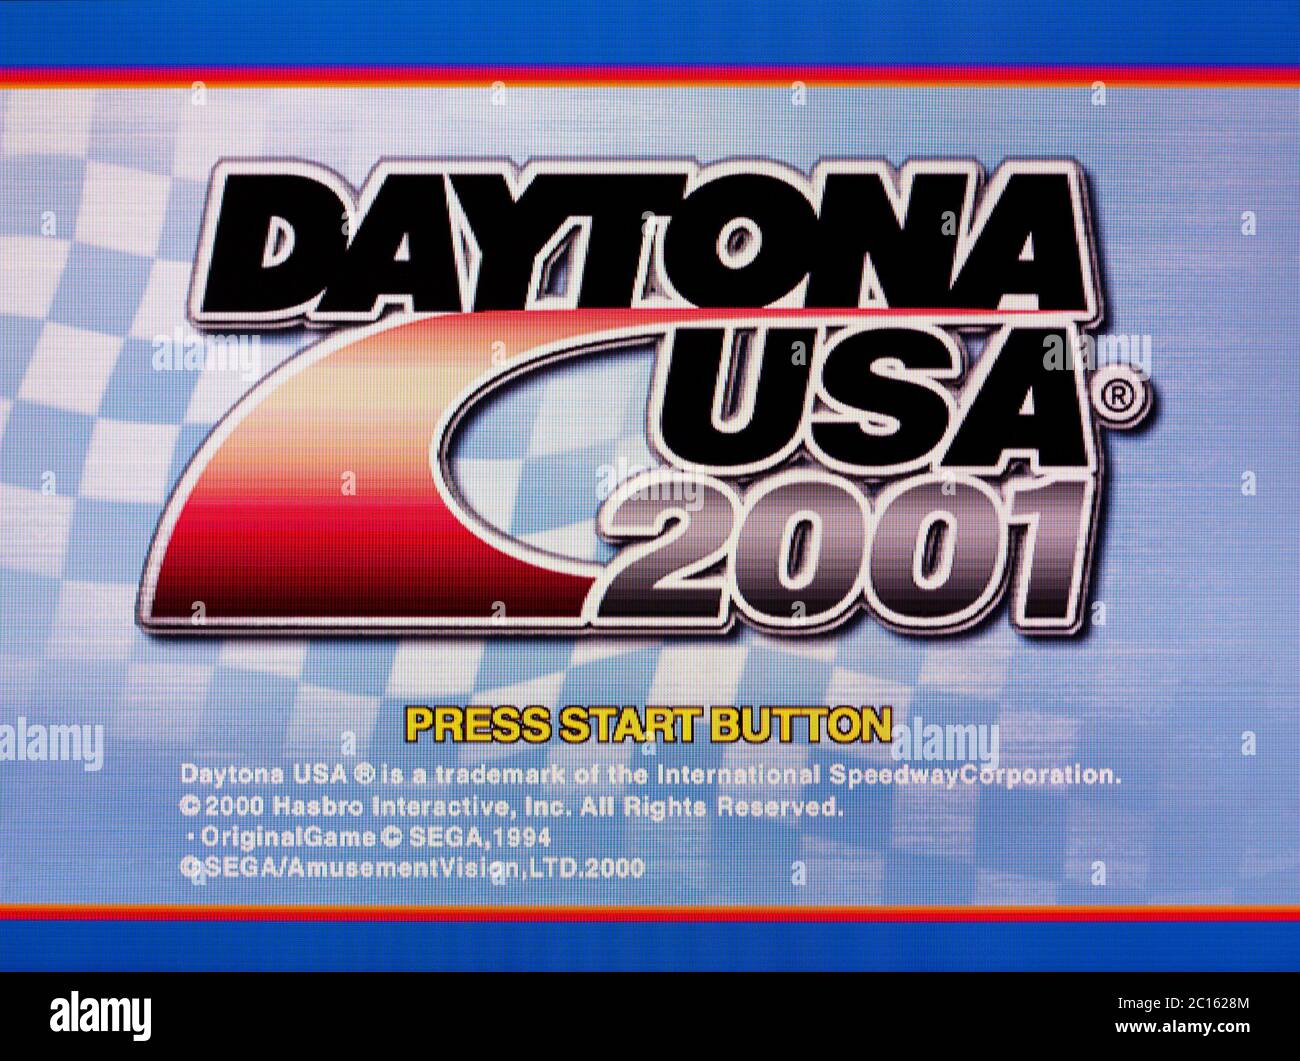 Daytona USA 2001 - Sega Dreamcast Videogame - Editorial use only Stock Photo